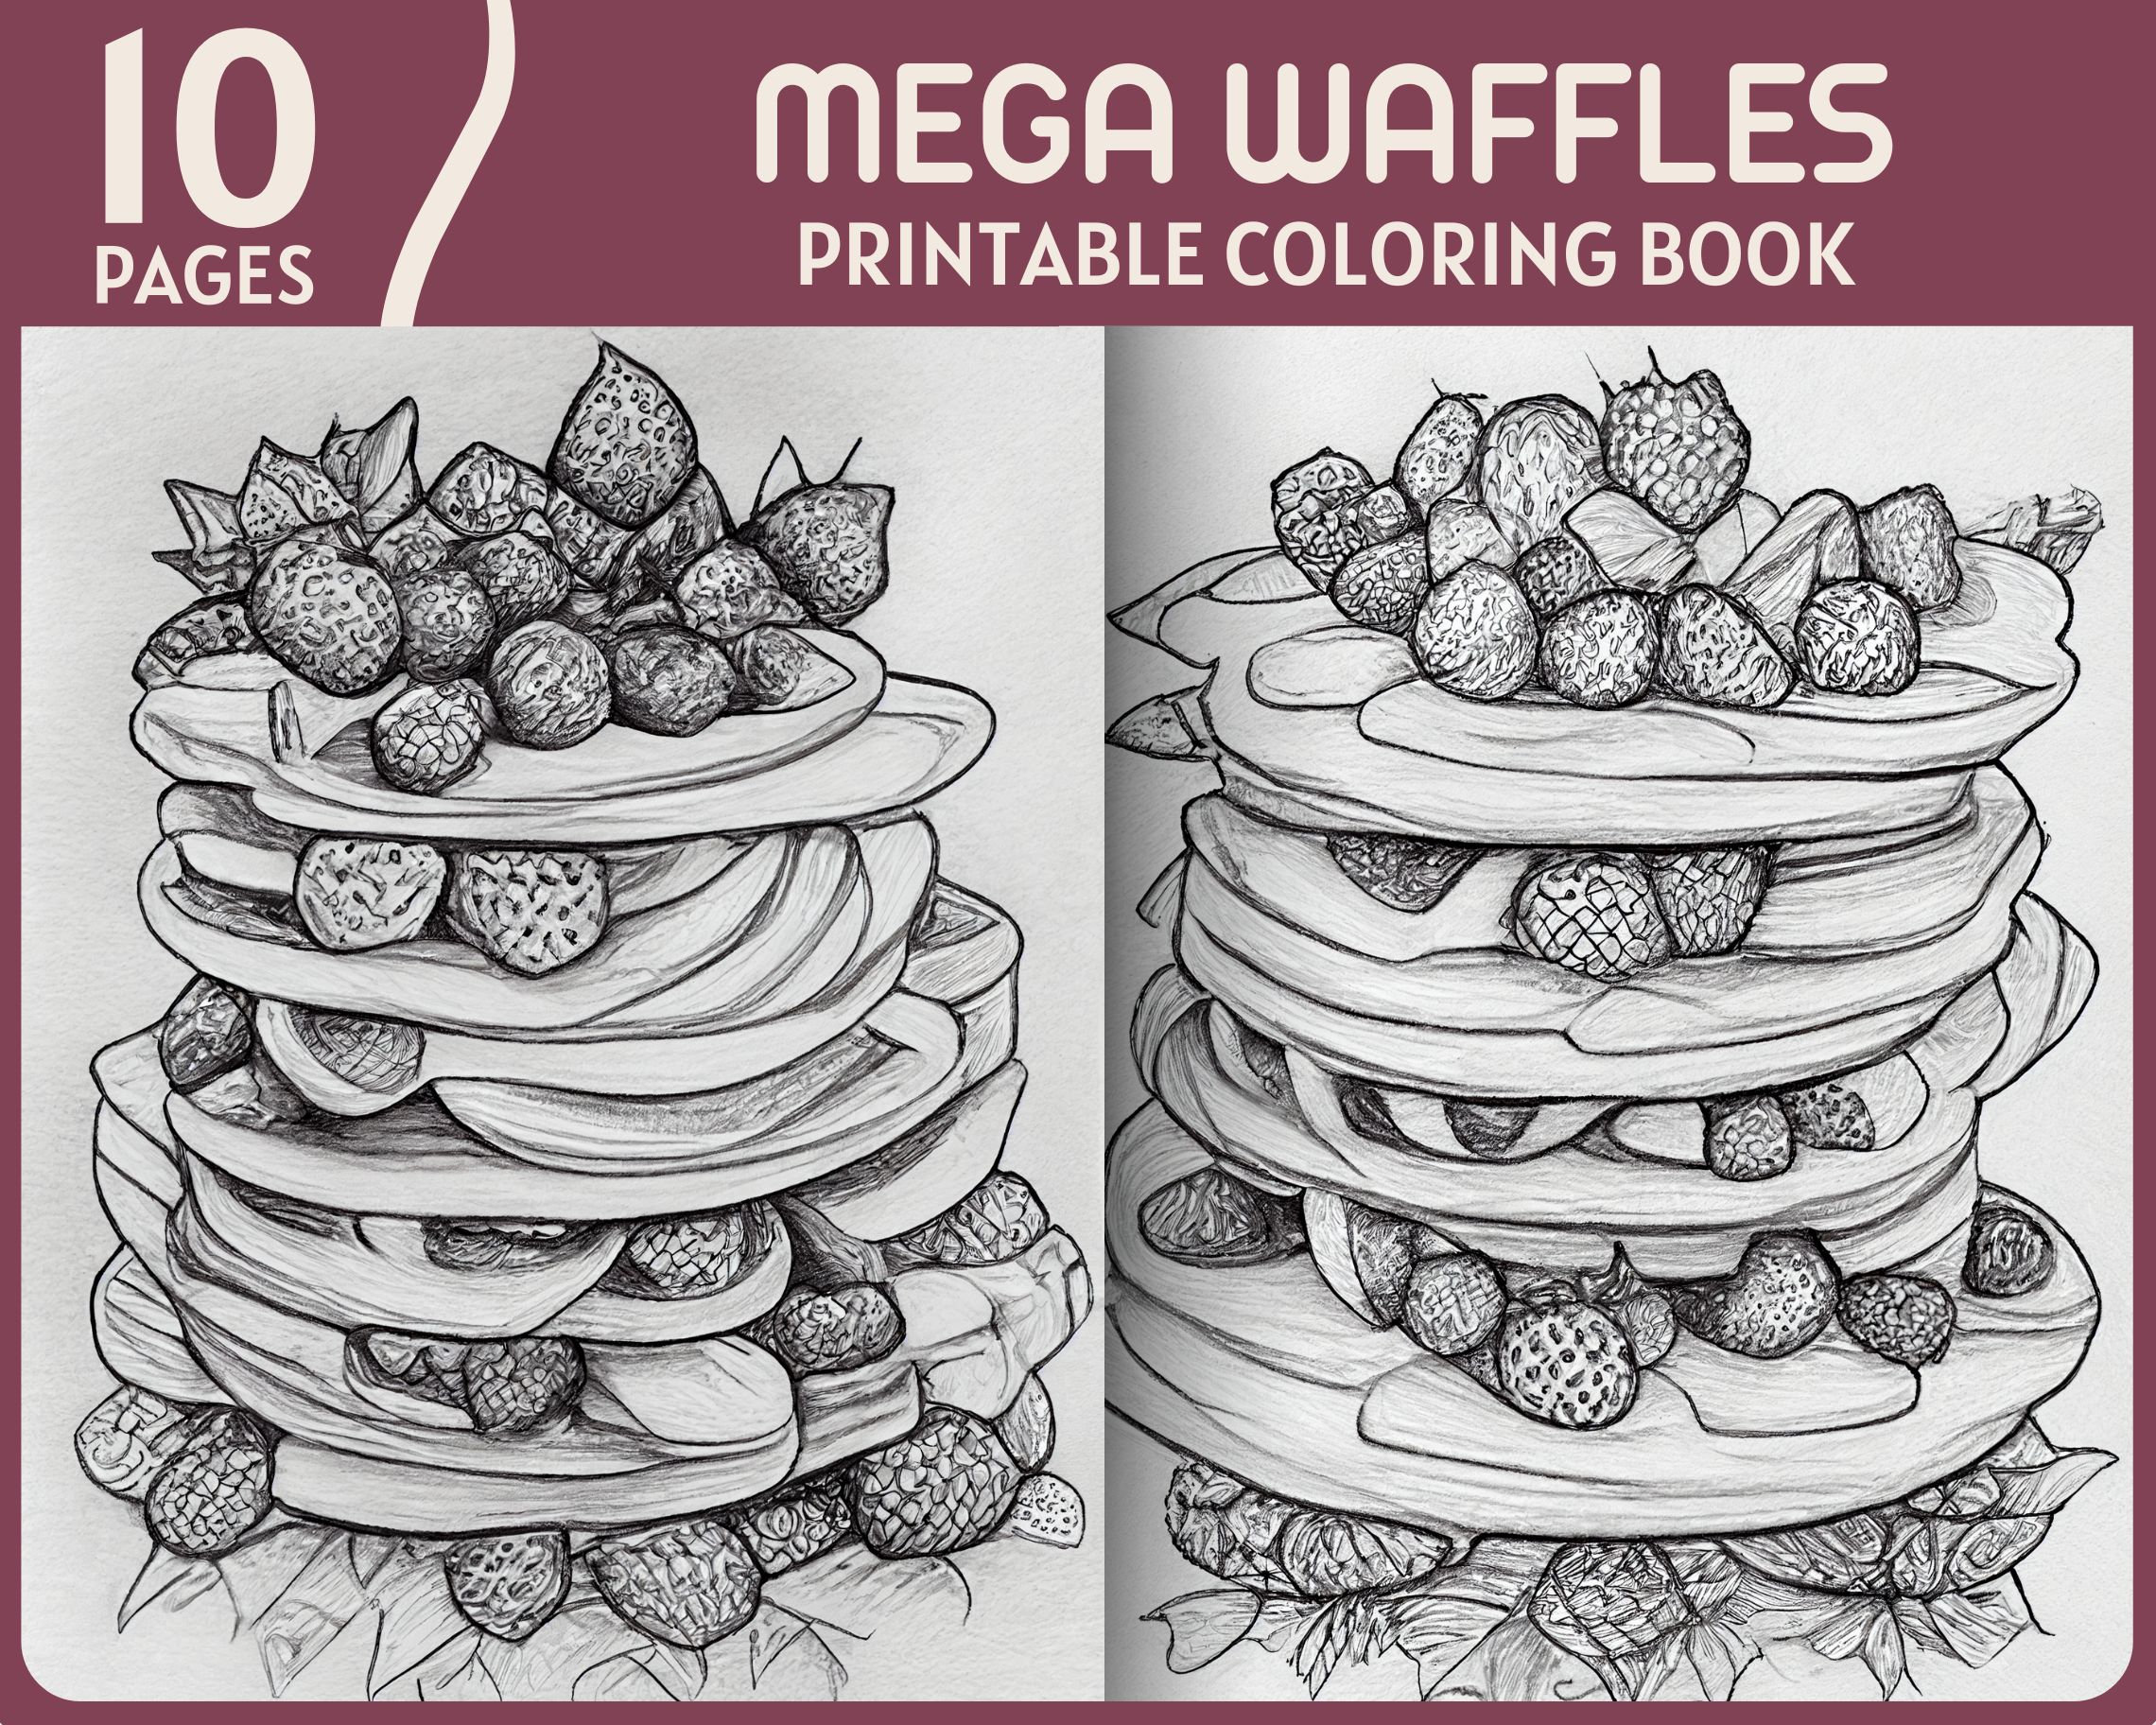 Mega waffles coloring pages yummy huge waffles coloring book waffle illustrations printable coloring book